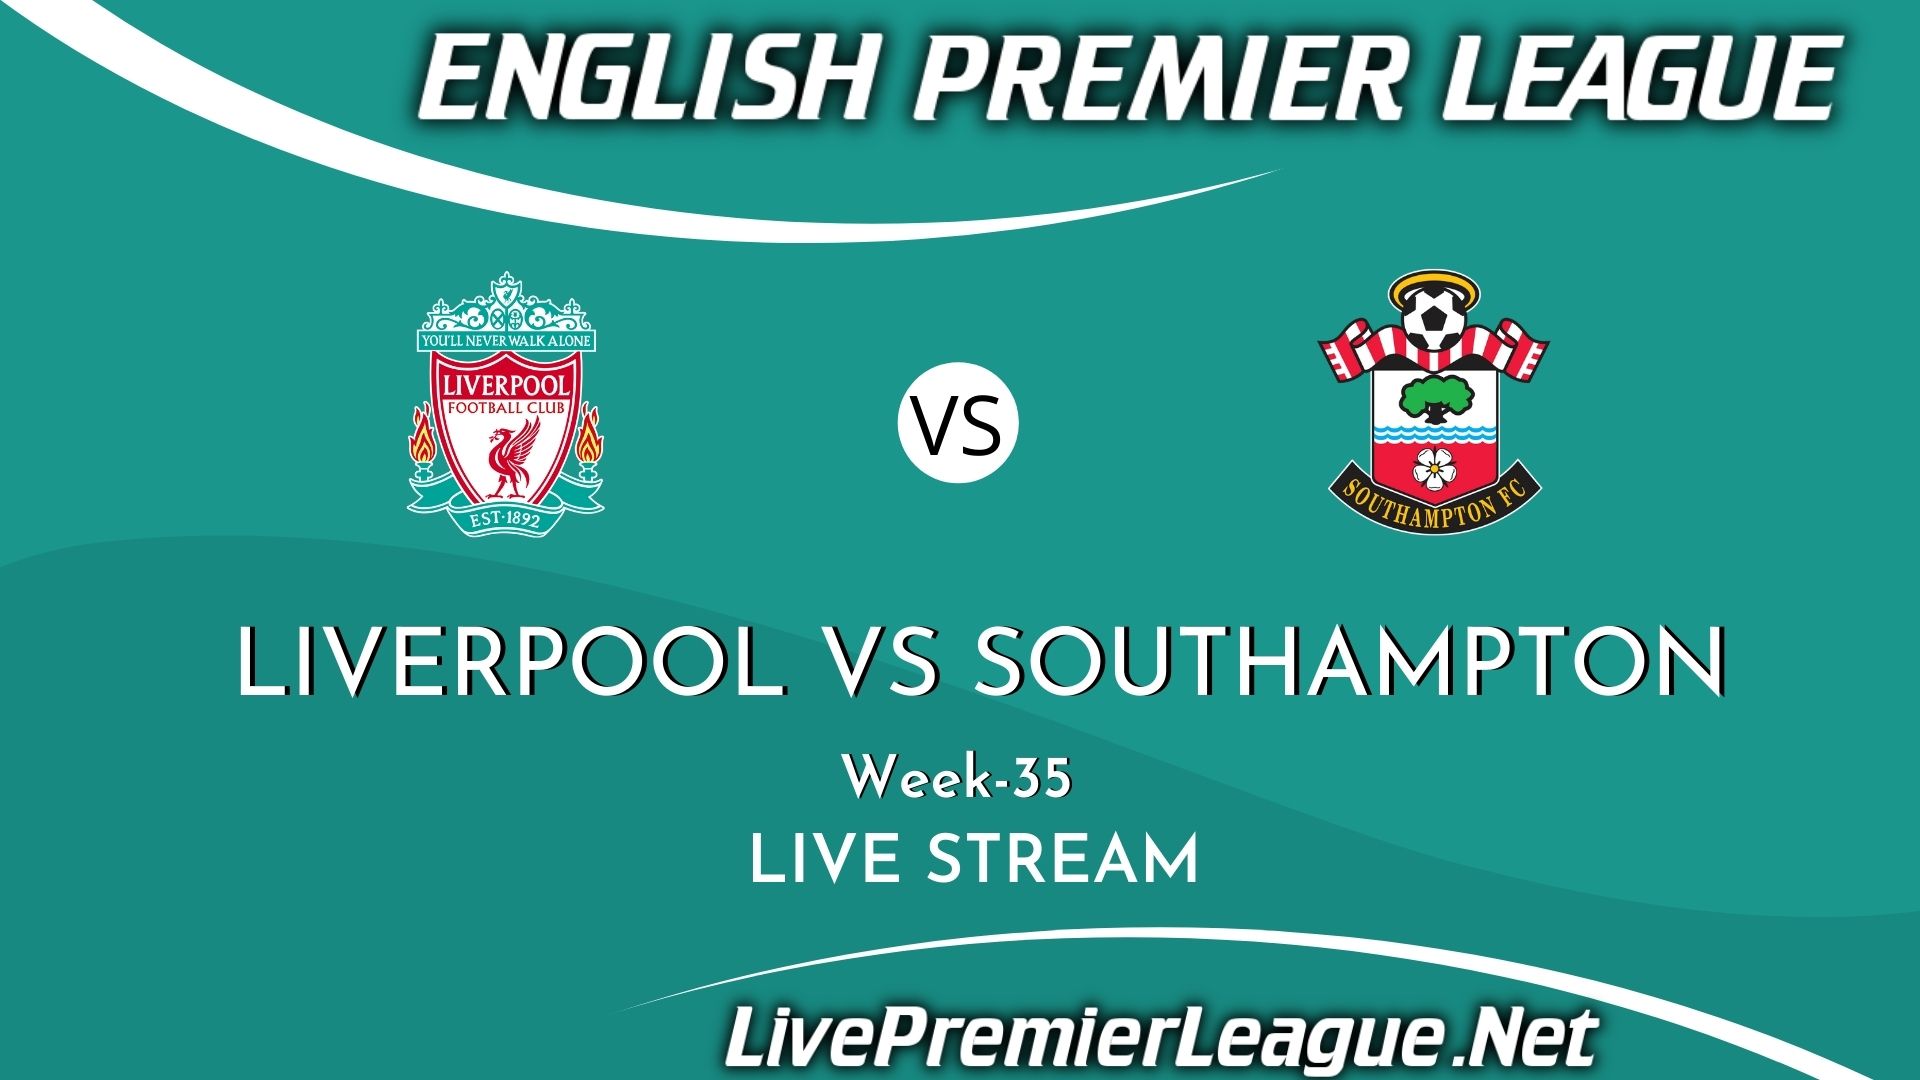 Liverpool Vs Southampton Live Stream 2021 | Premier League Week 35